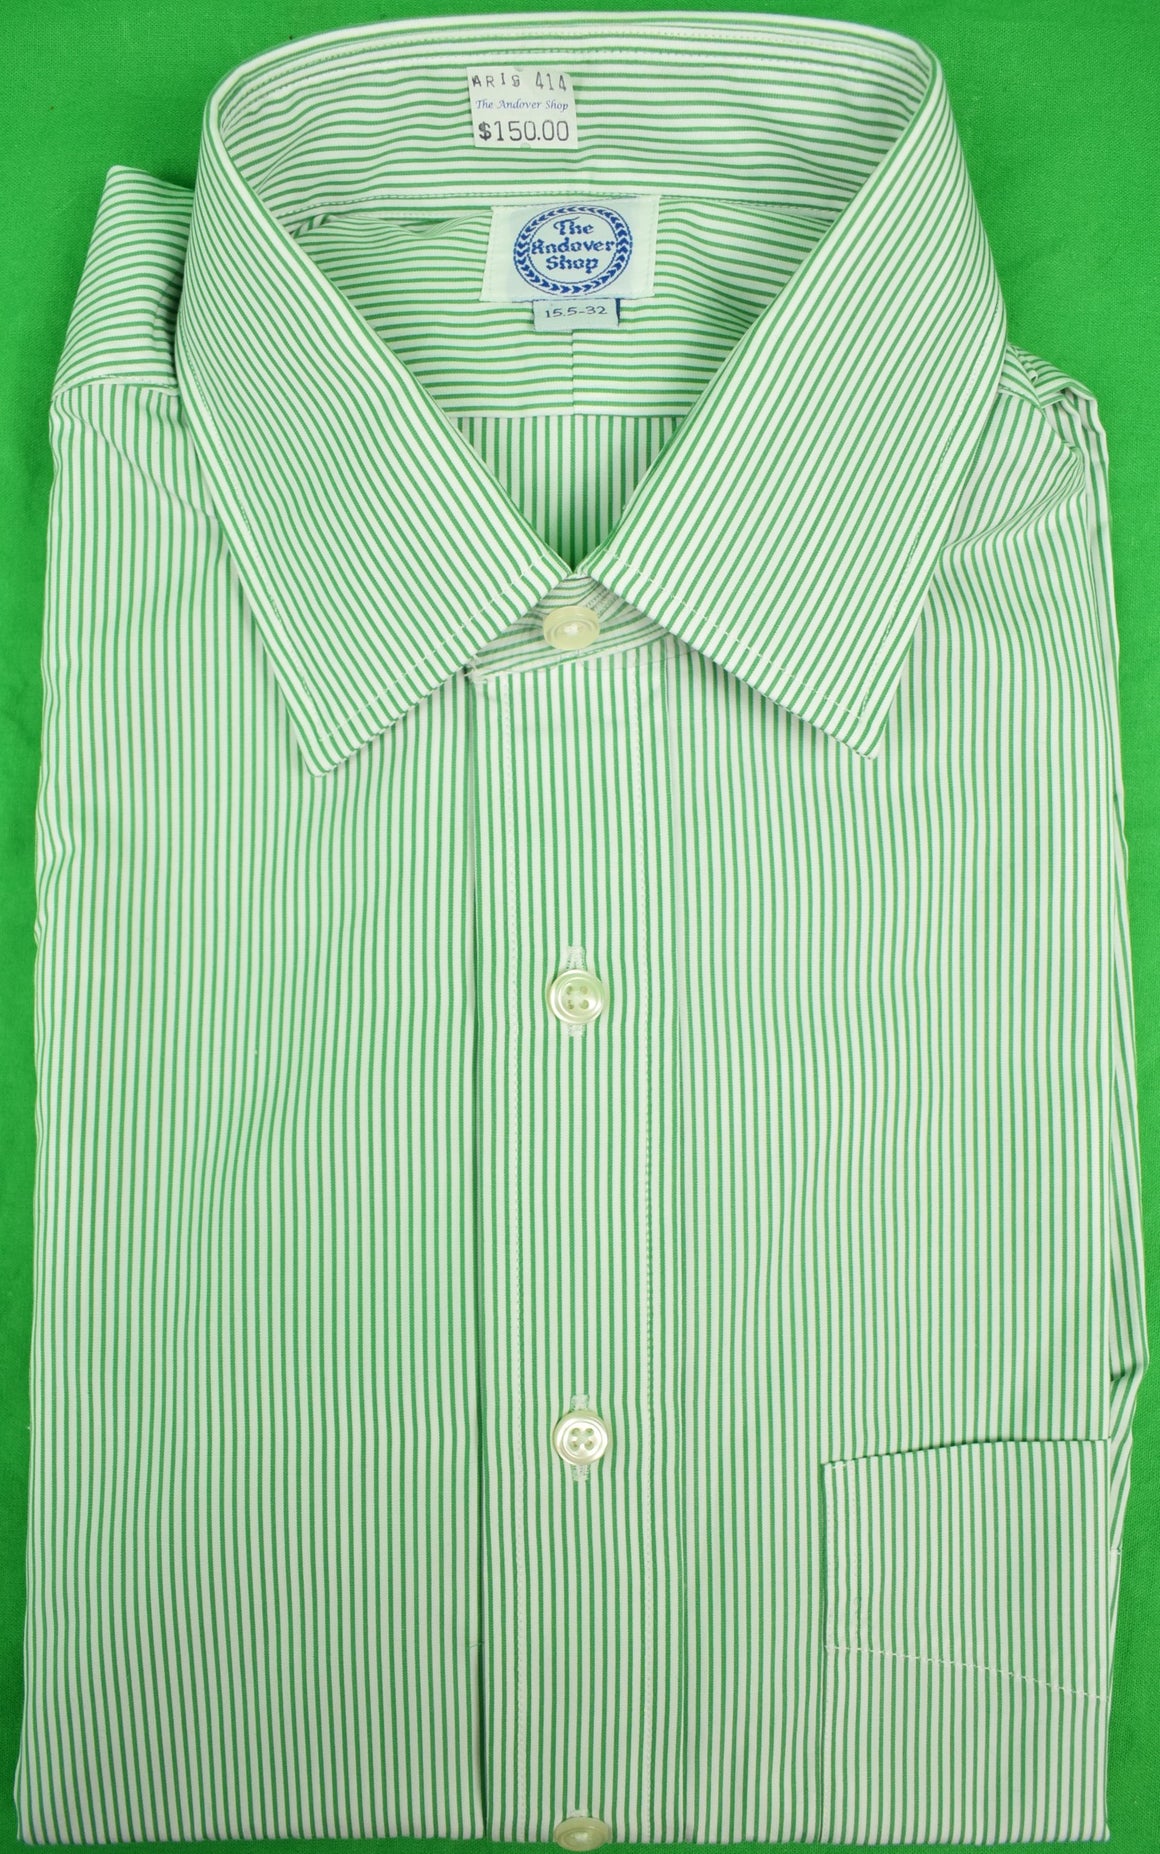 The Andover Shop Green/ White Pinstripe Dress Shirt Sz: 15.5-32 (New w/ Tag!)